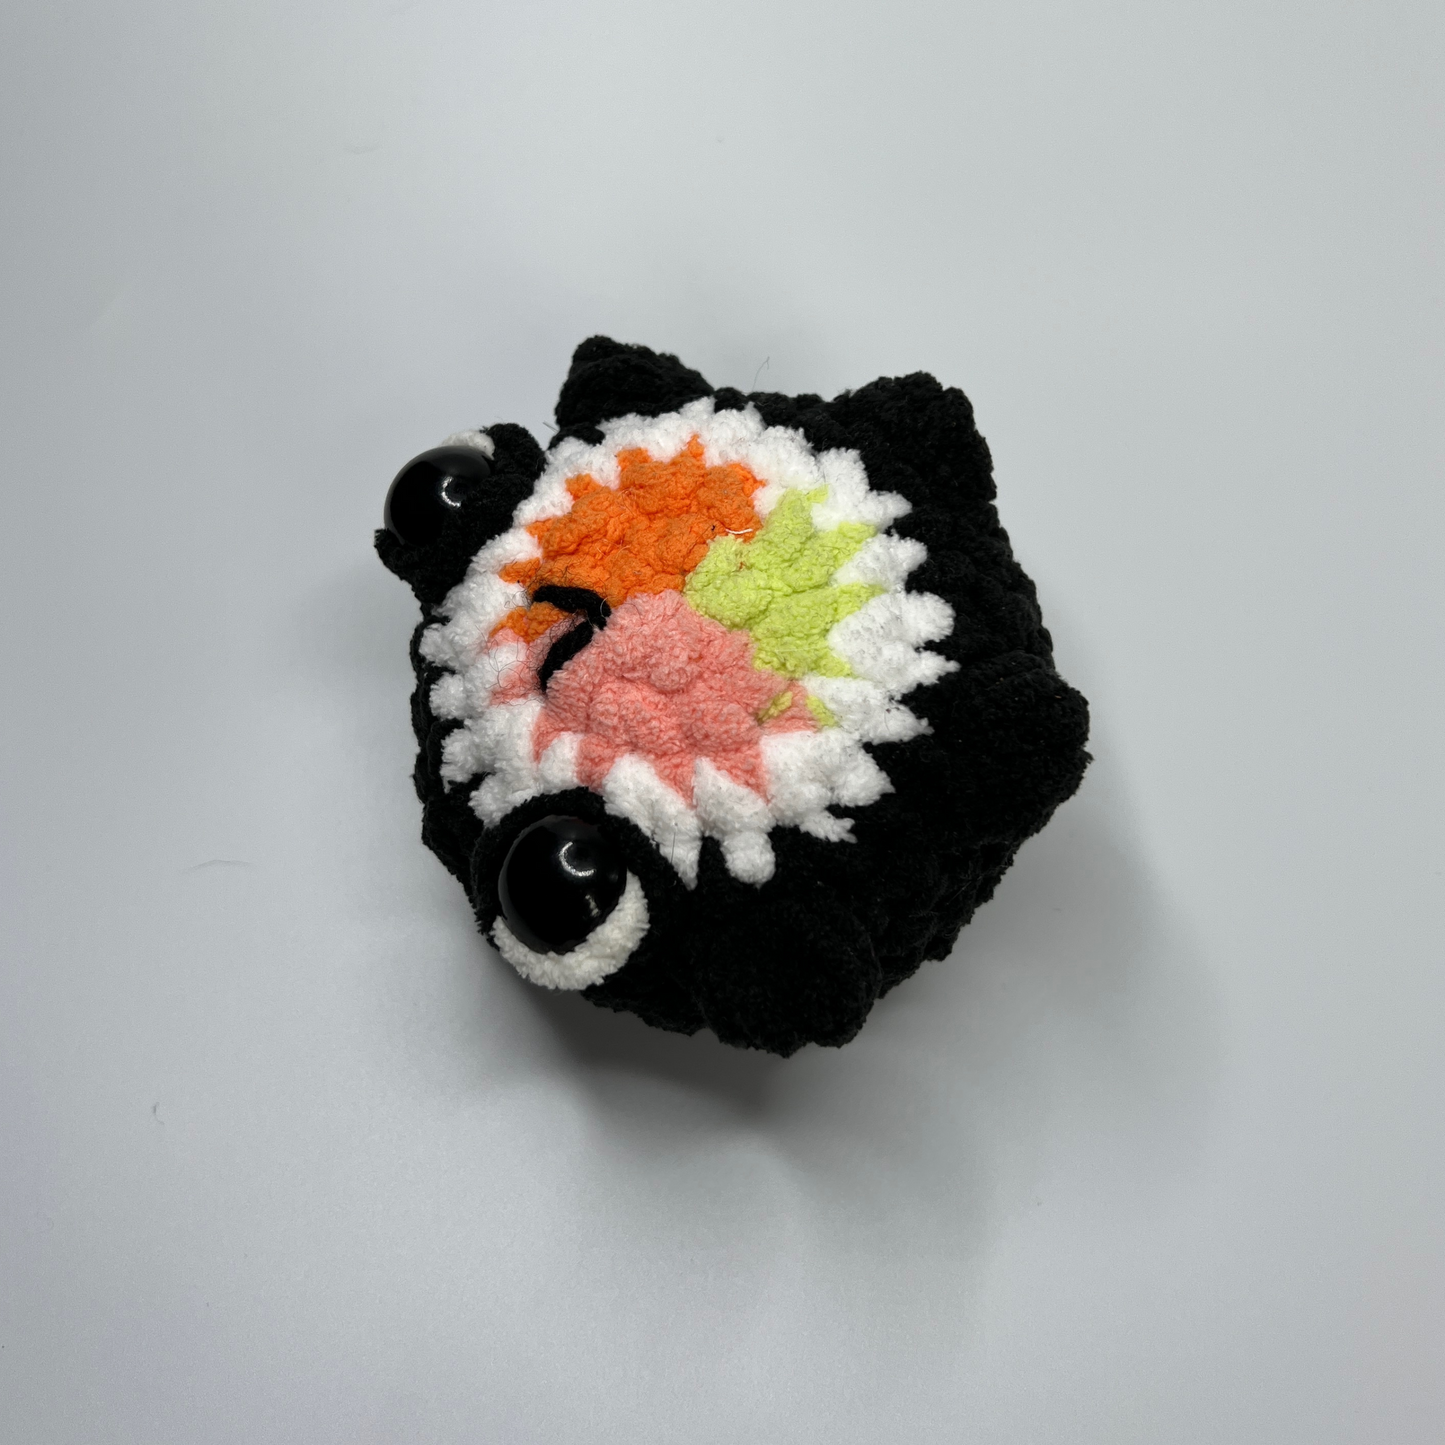 Sushi Frog Crochet Pattern [PDF FILE]